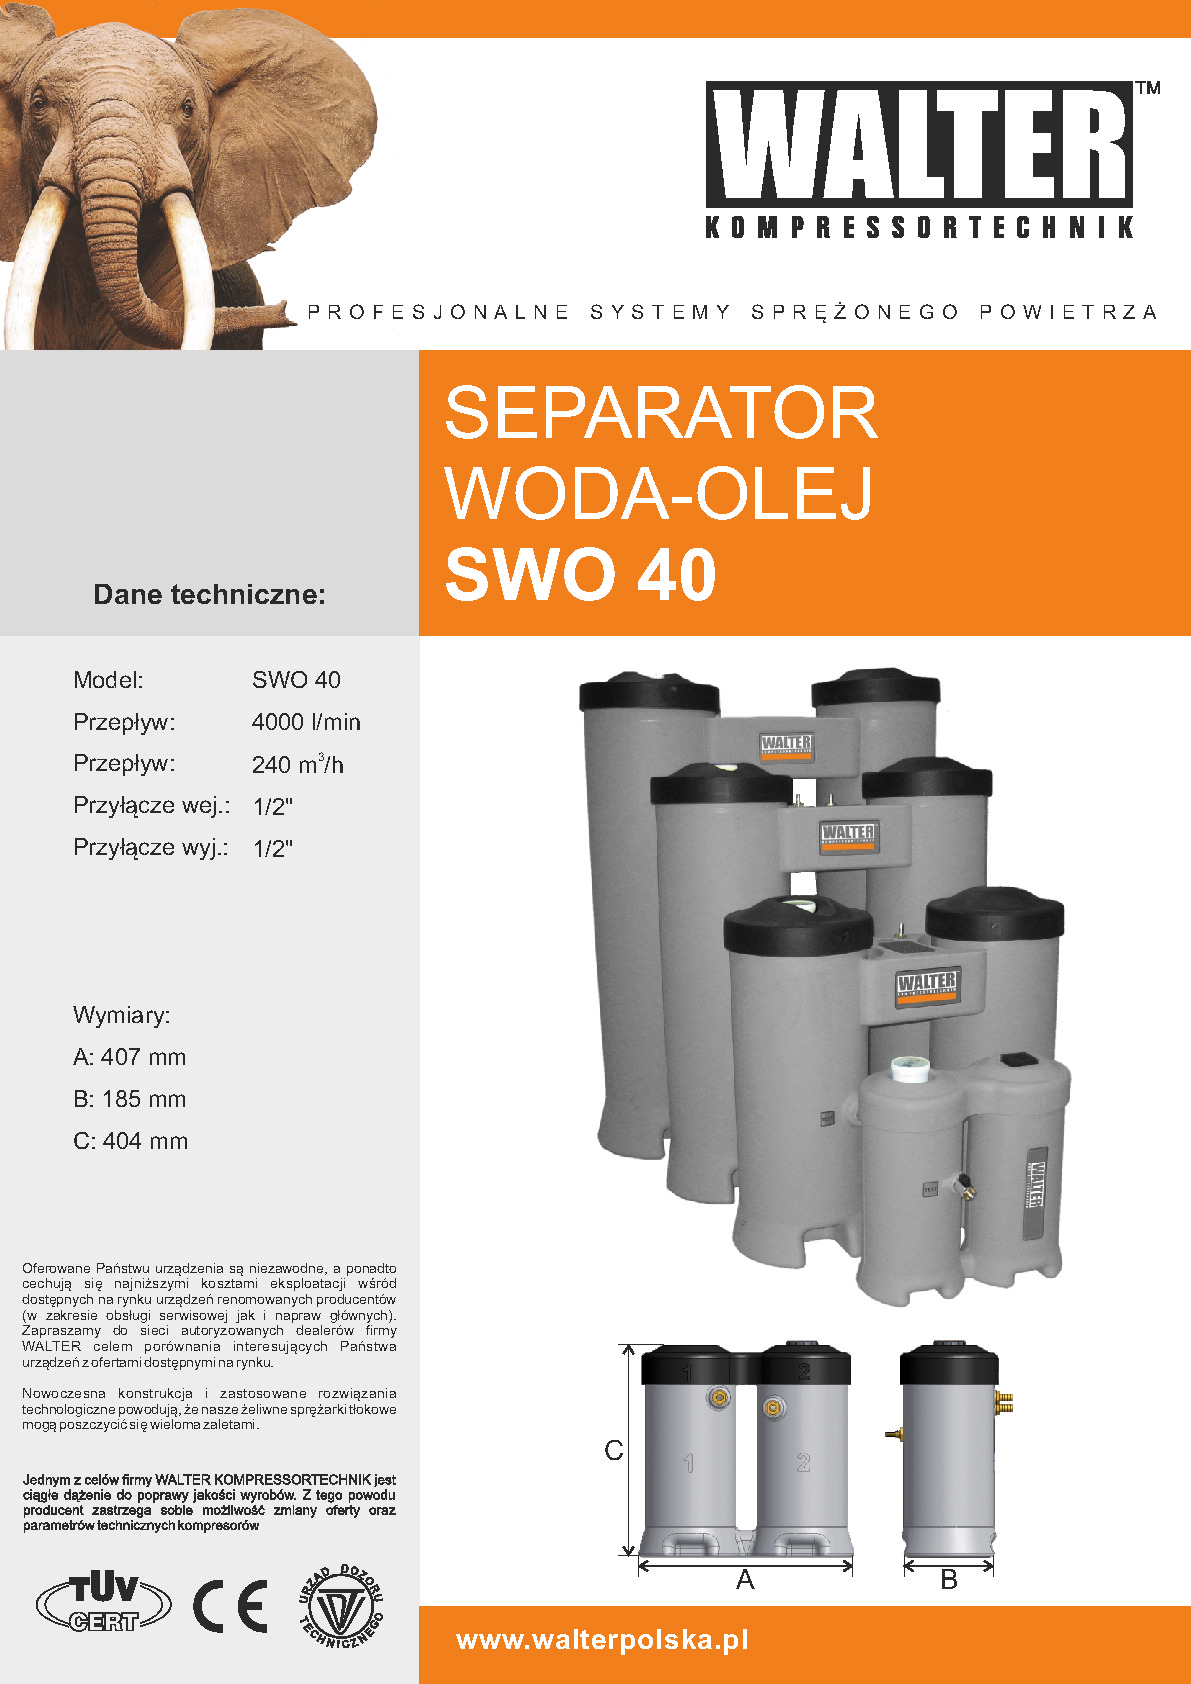 Separator SWO 40